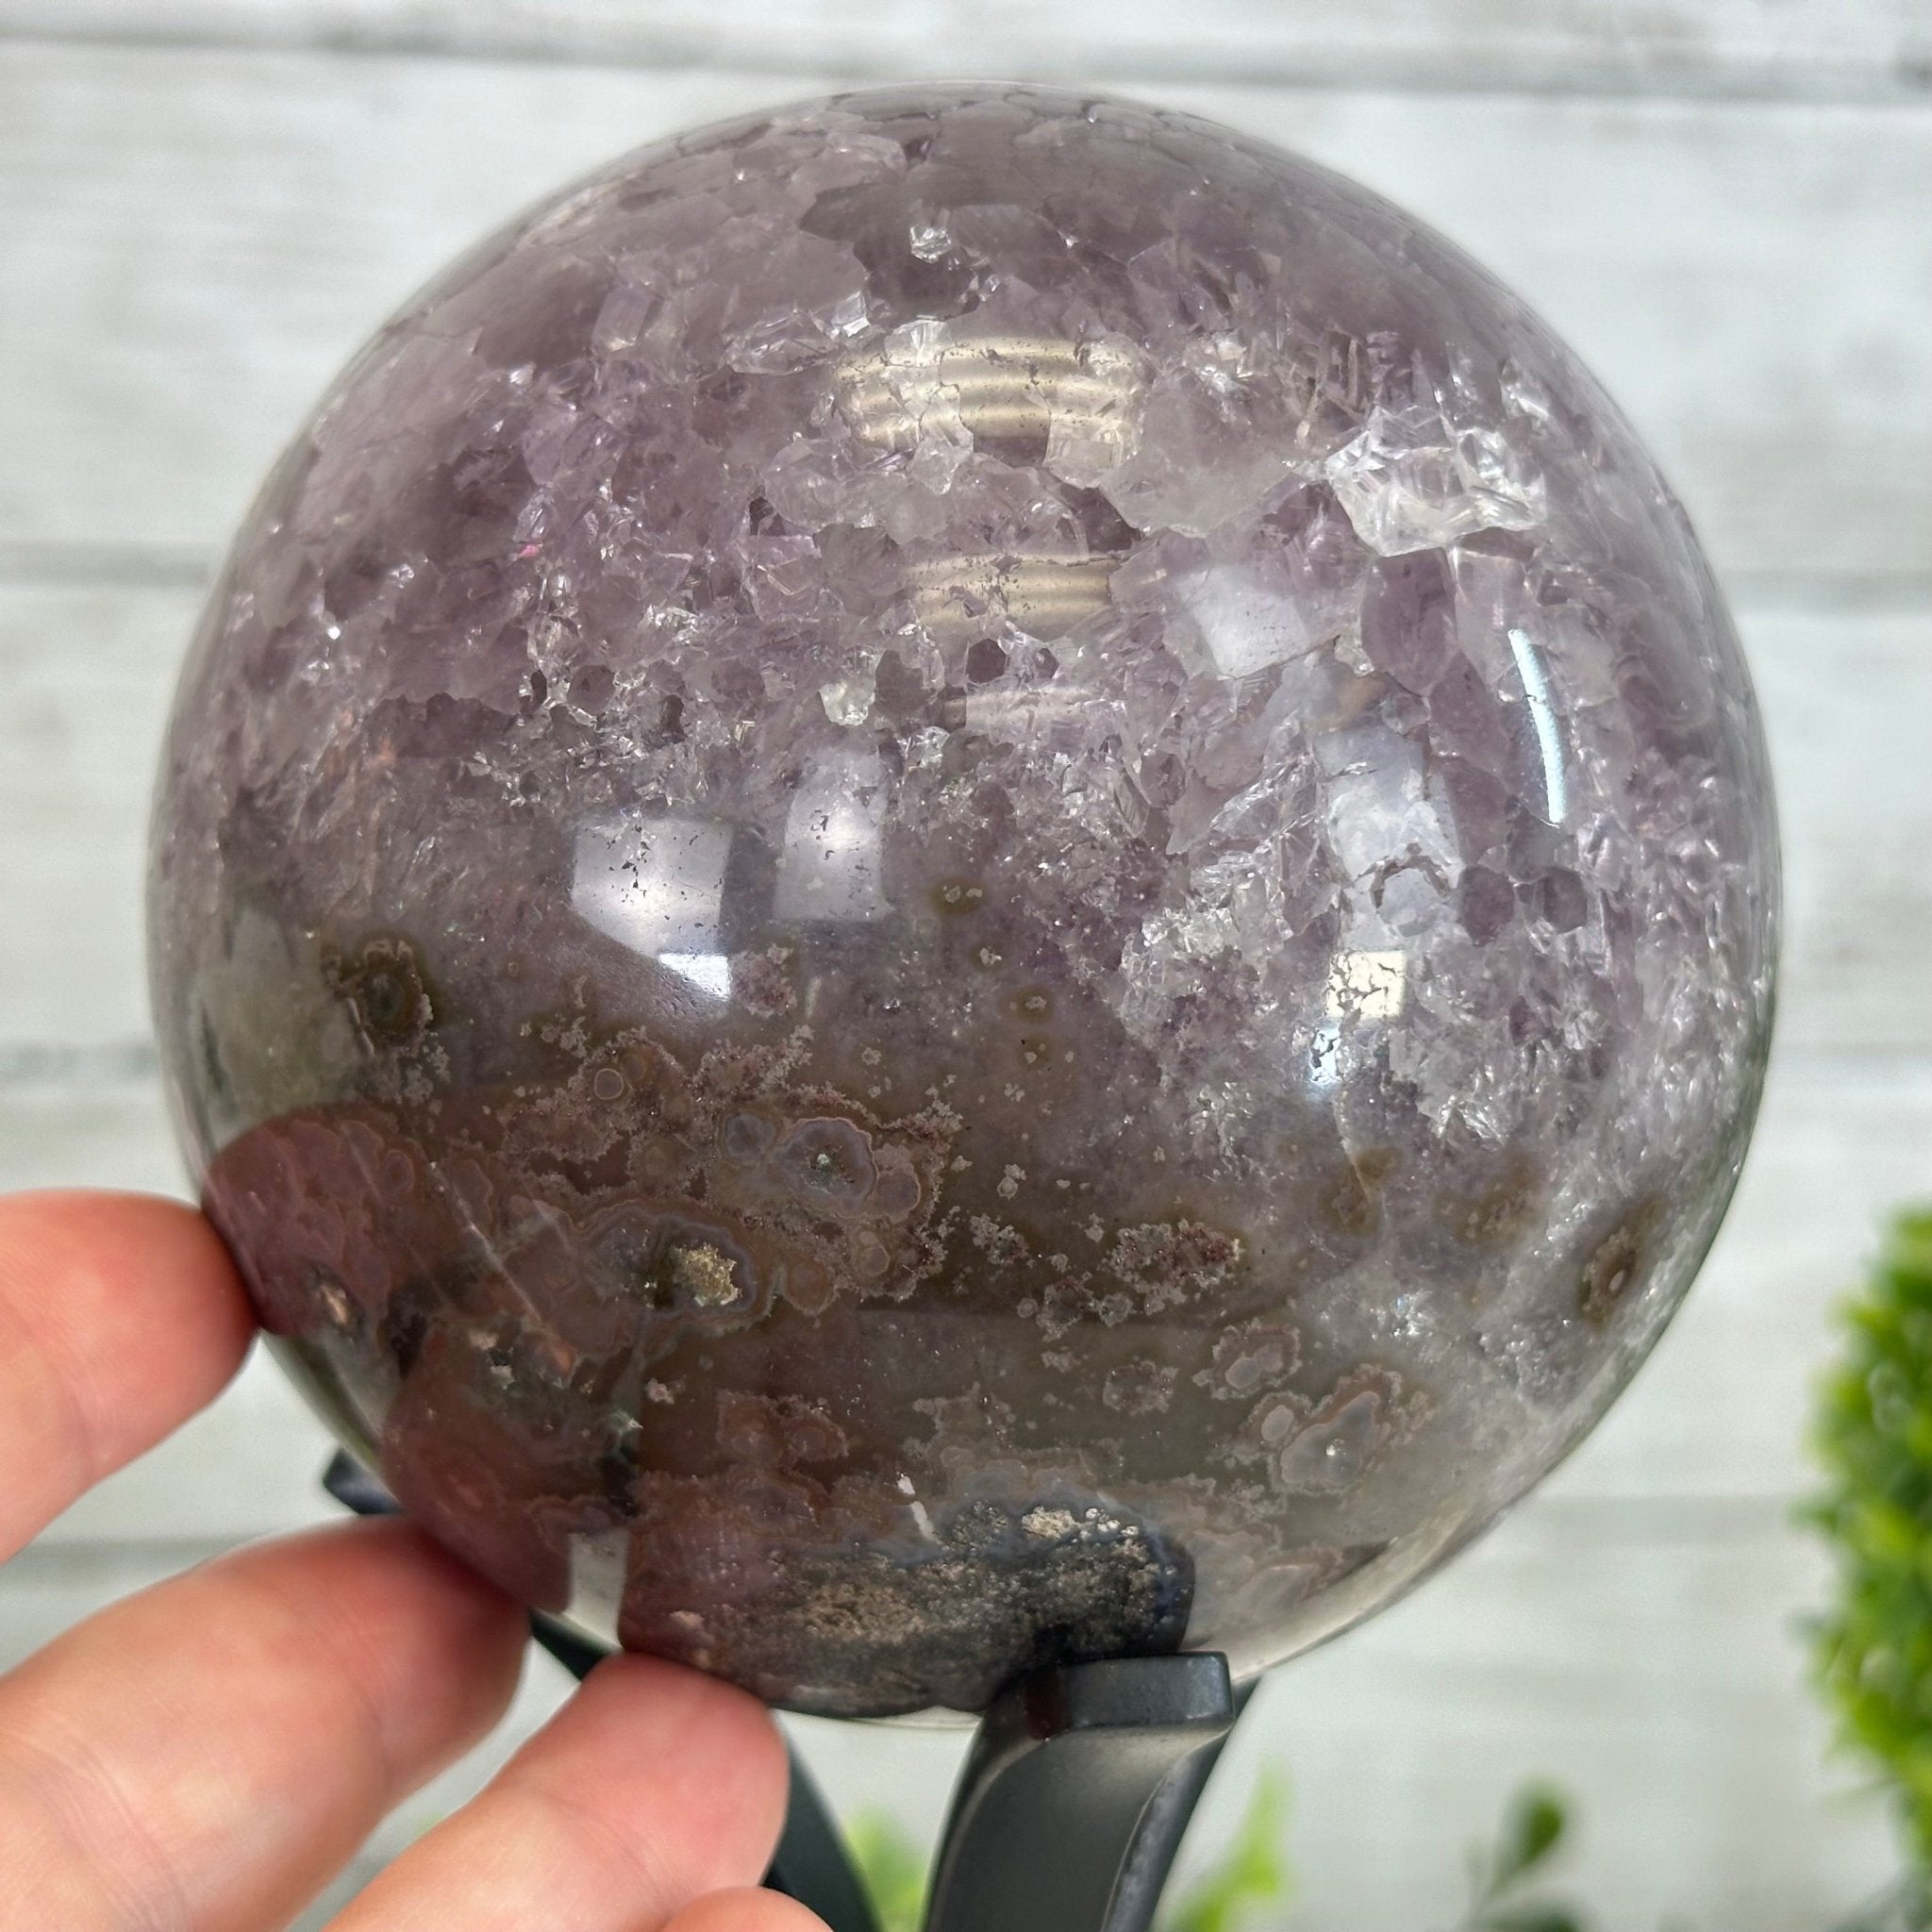 Druzy Amethyst Sphere on a Metal Stand, 3.4 lbs & 8.7" Tall #5630-0054 - Brazil GemsBrazil GemsDruzy Amethyst Sphere on a Metal Stand, 3.4 lbs & 8.7" Tall #5630-0054Spheres5630-0054